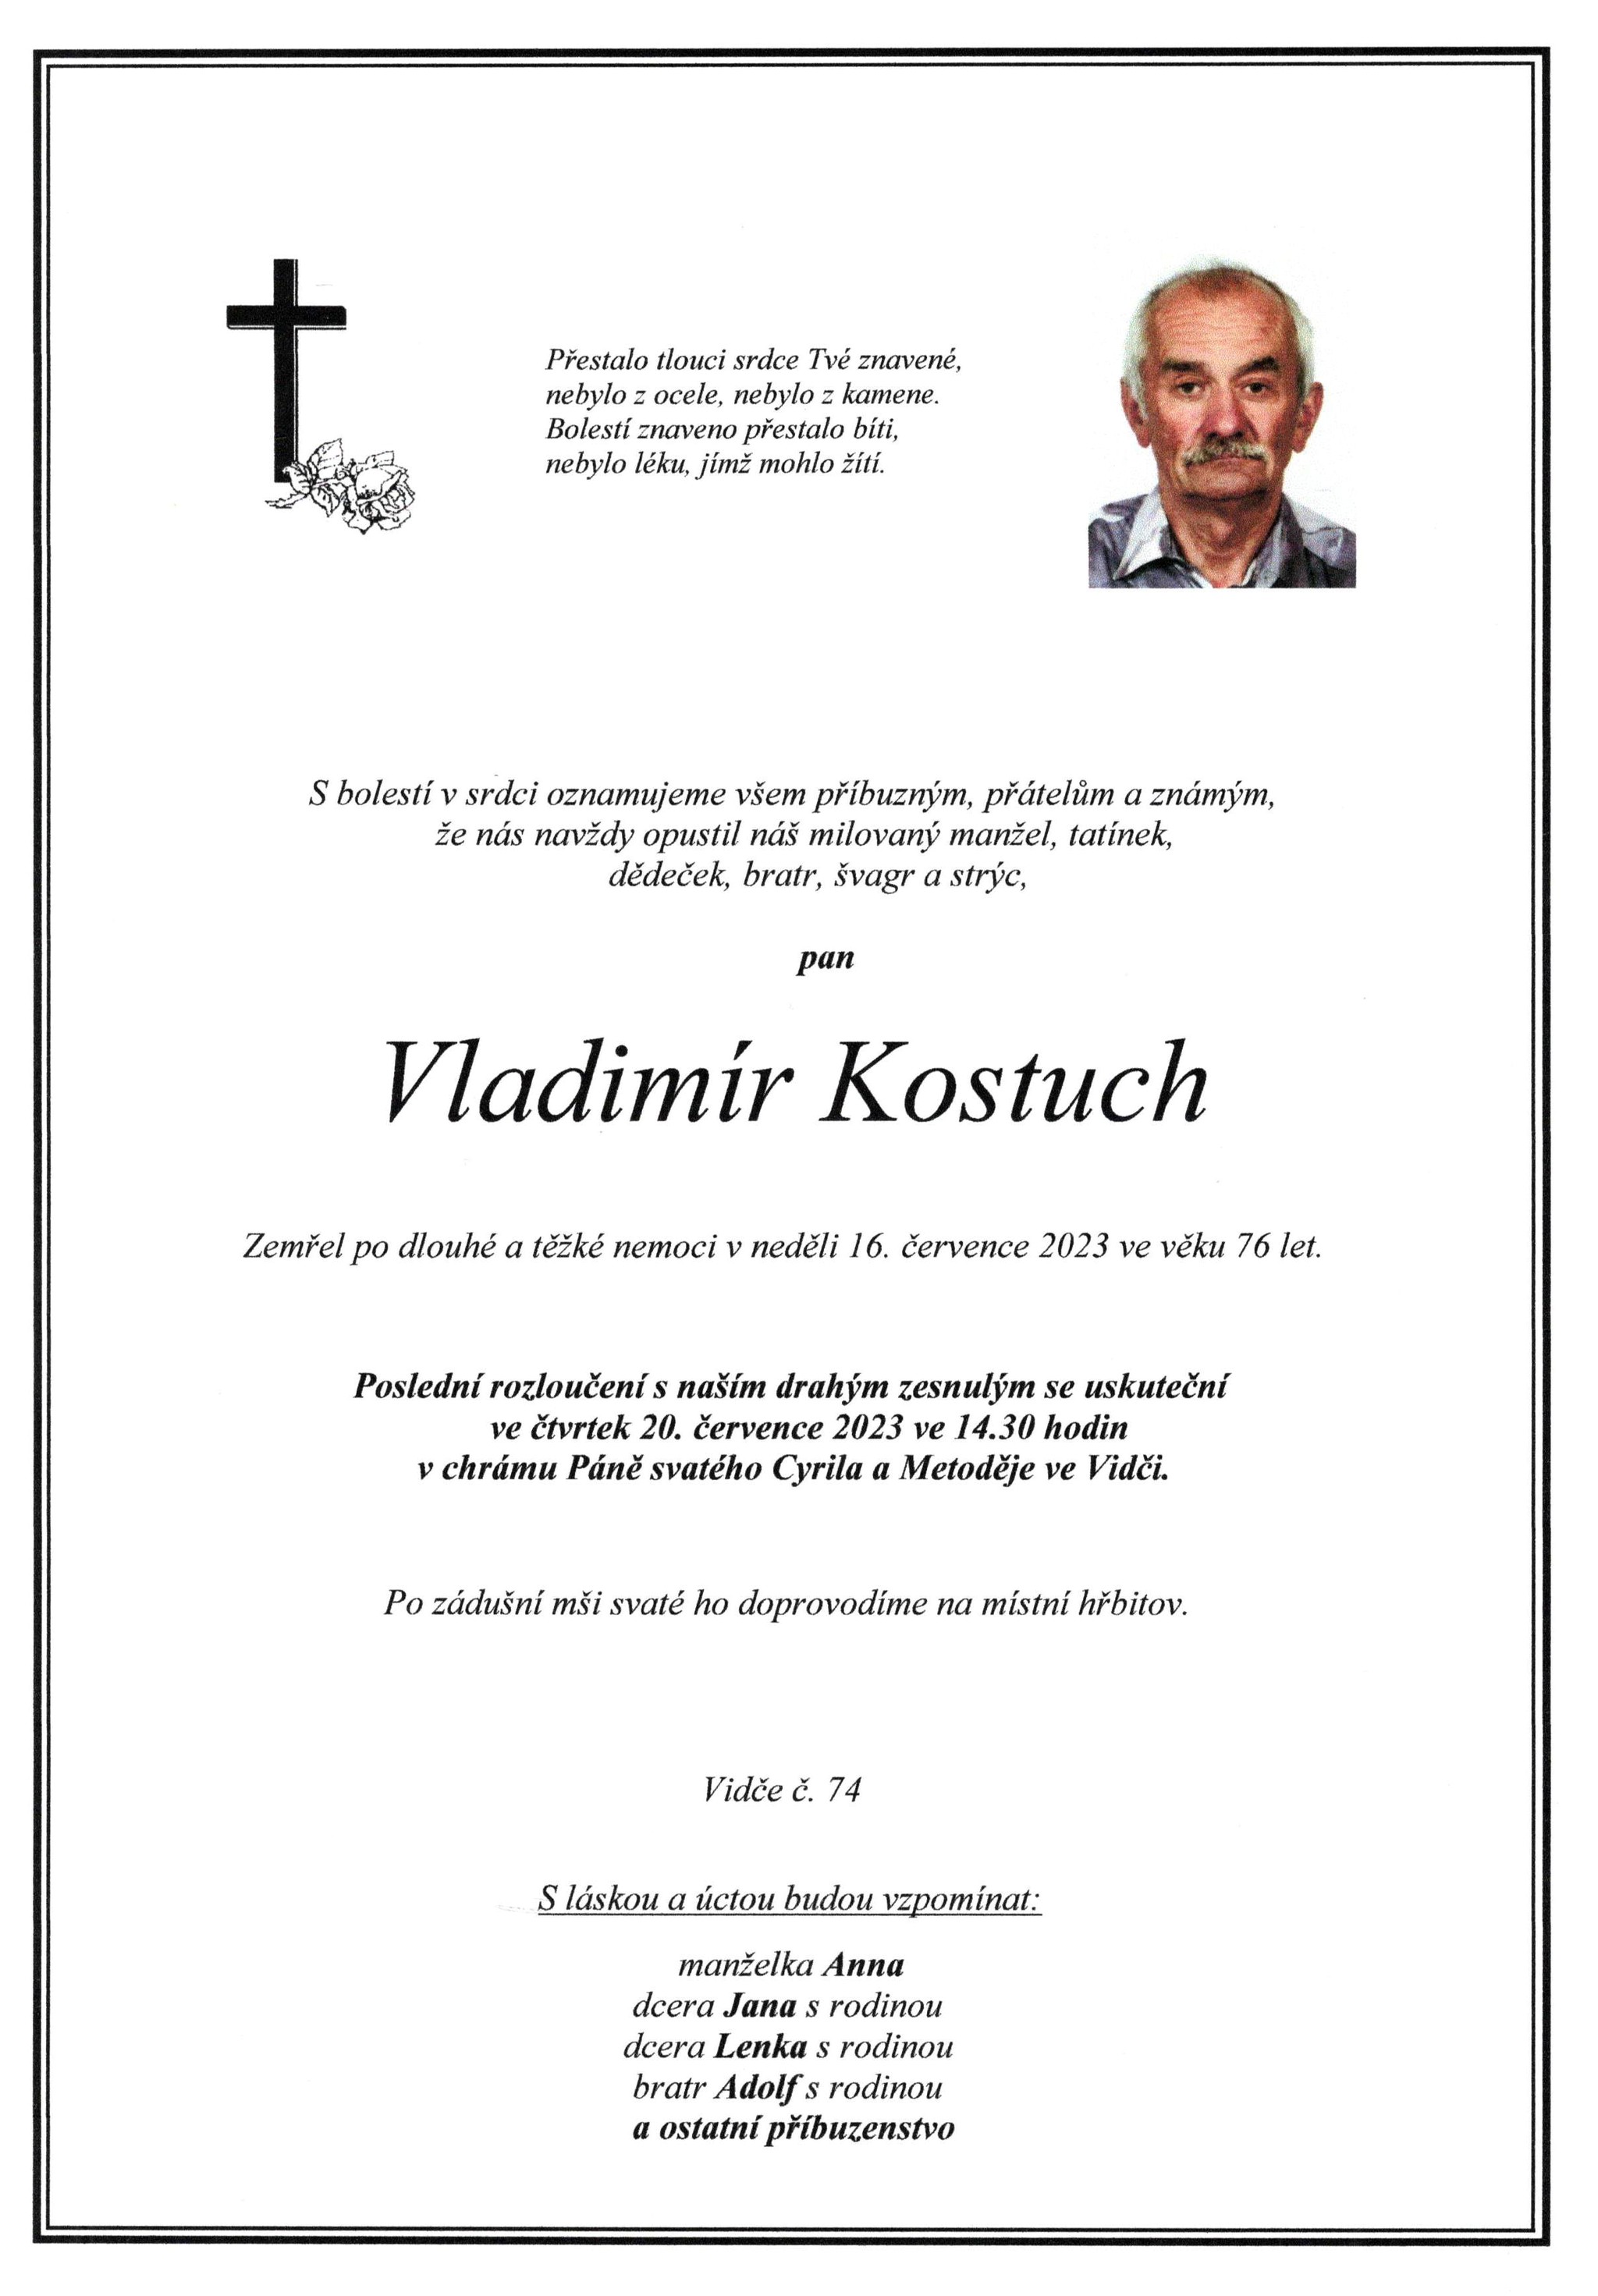 Vladimír Kostuch